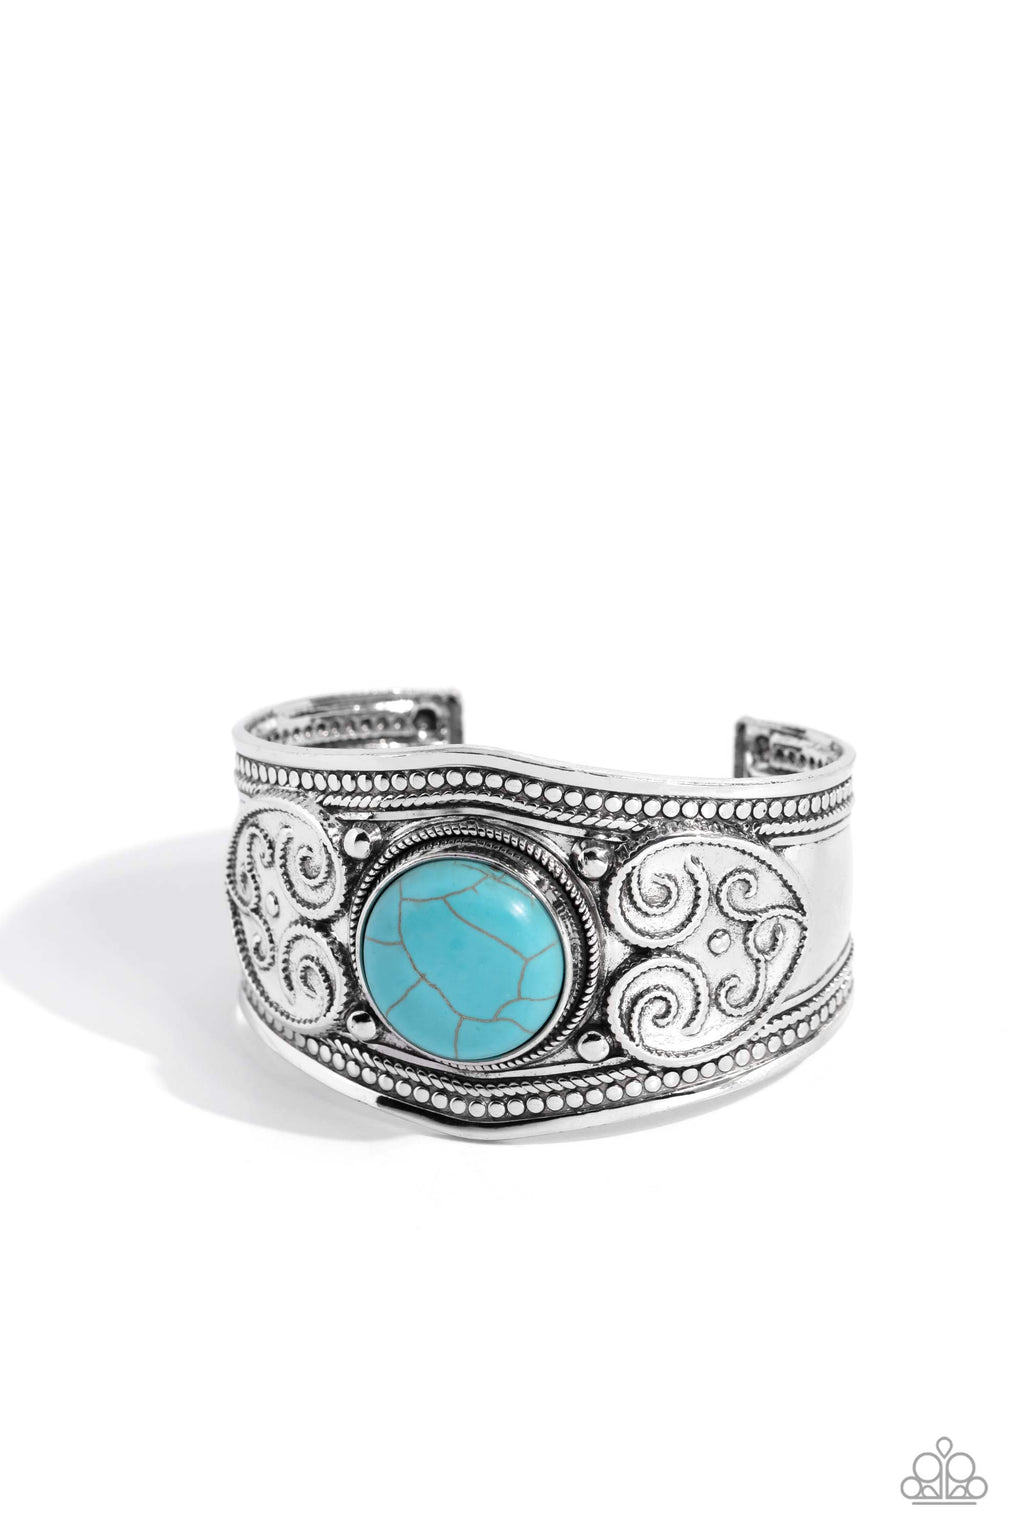 five-dollar-jewelry-prairie-romance-blue-bracelet-paparazzi-accessories